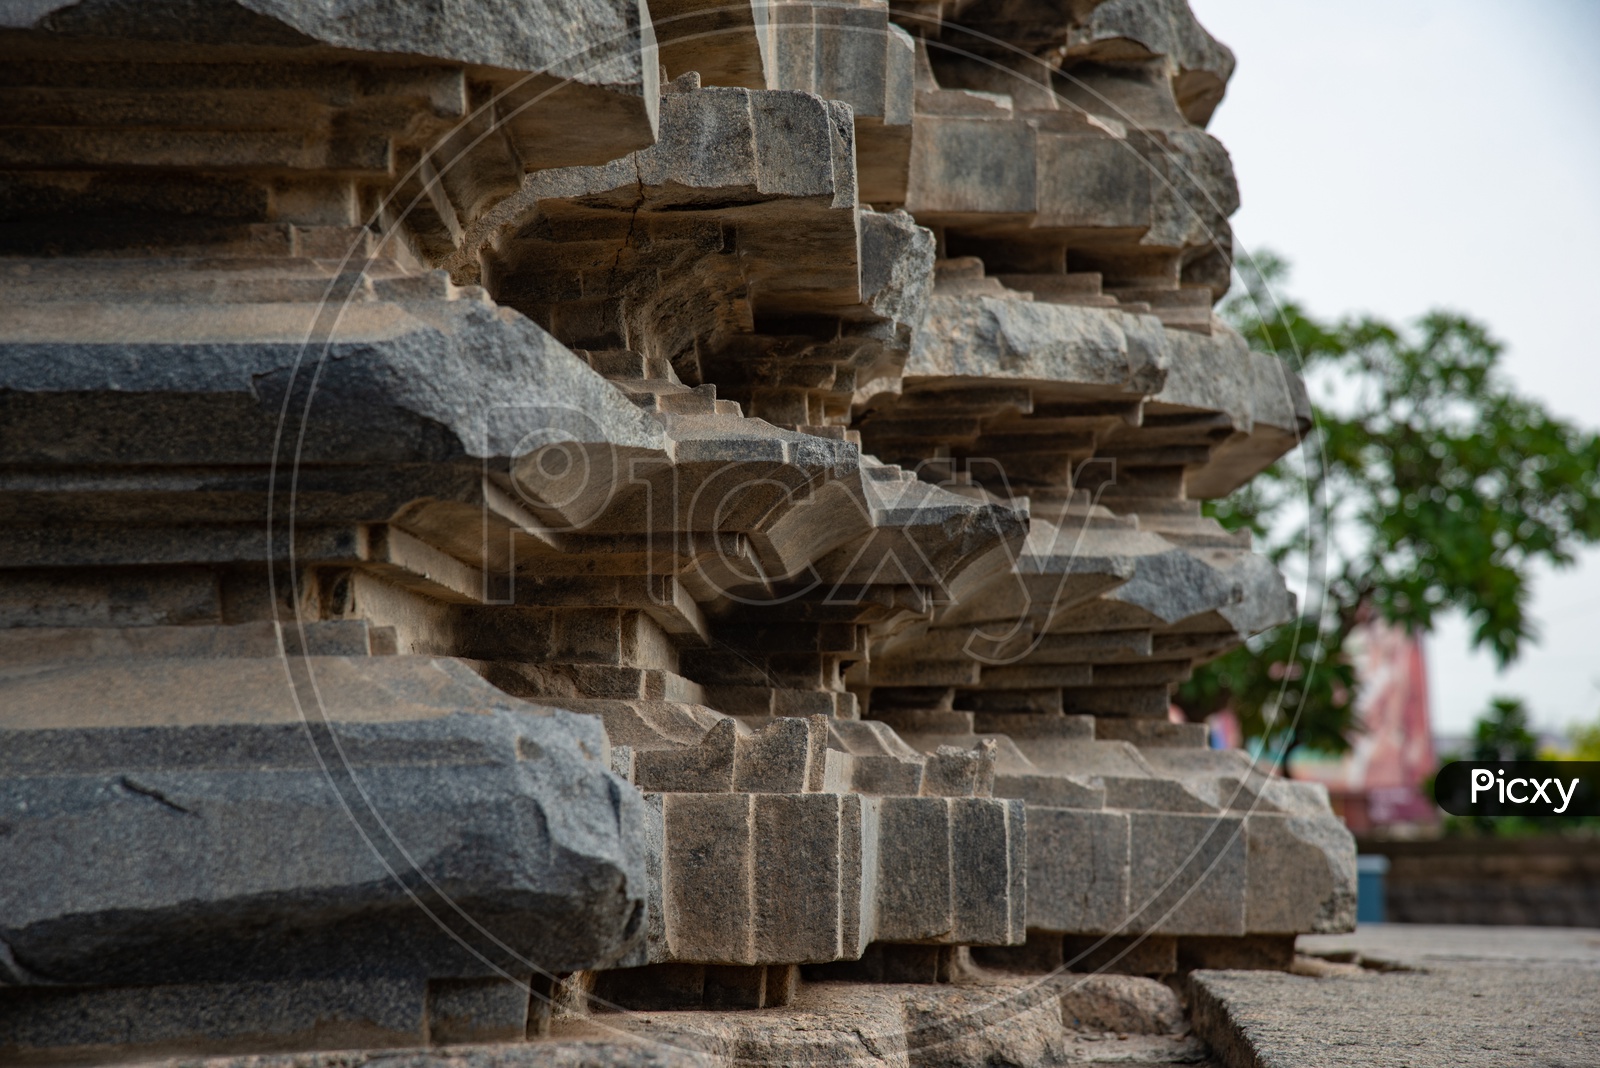 Architecture/Sculptures at Thousand Pillar Temple